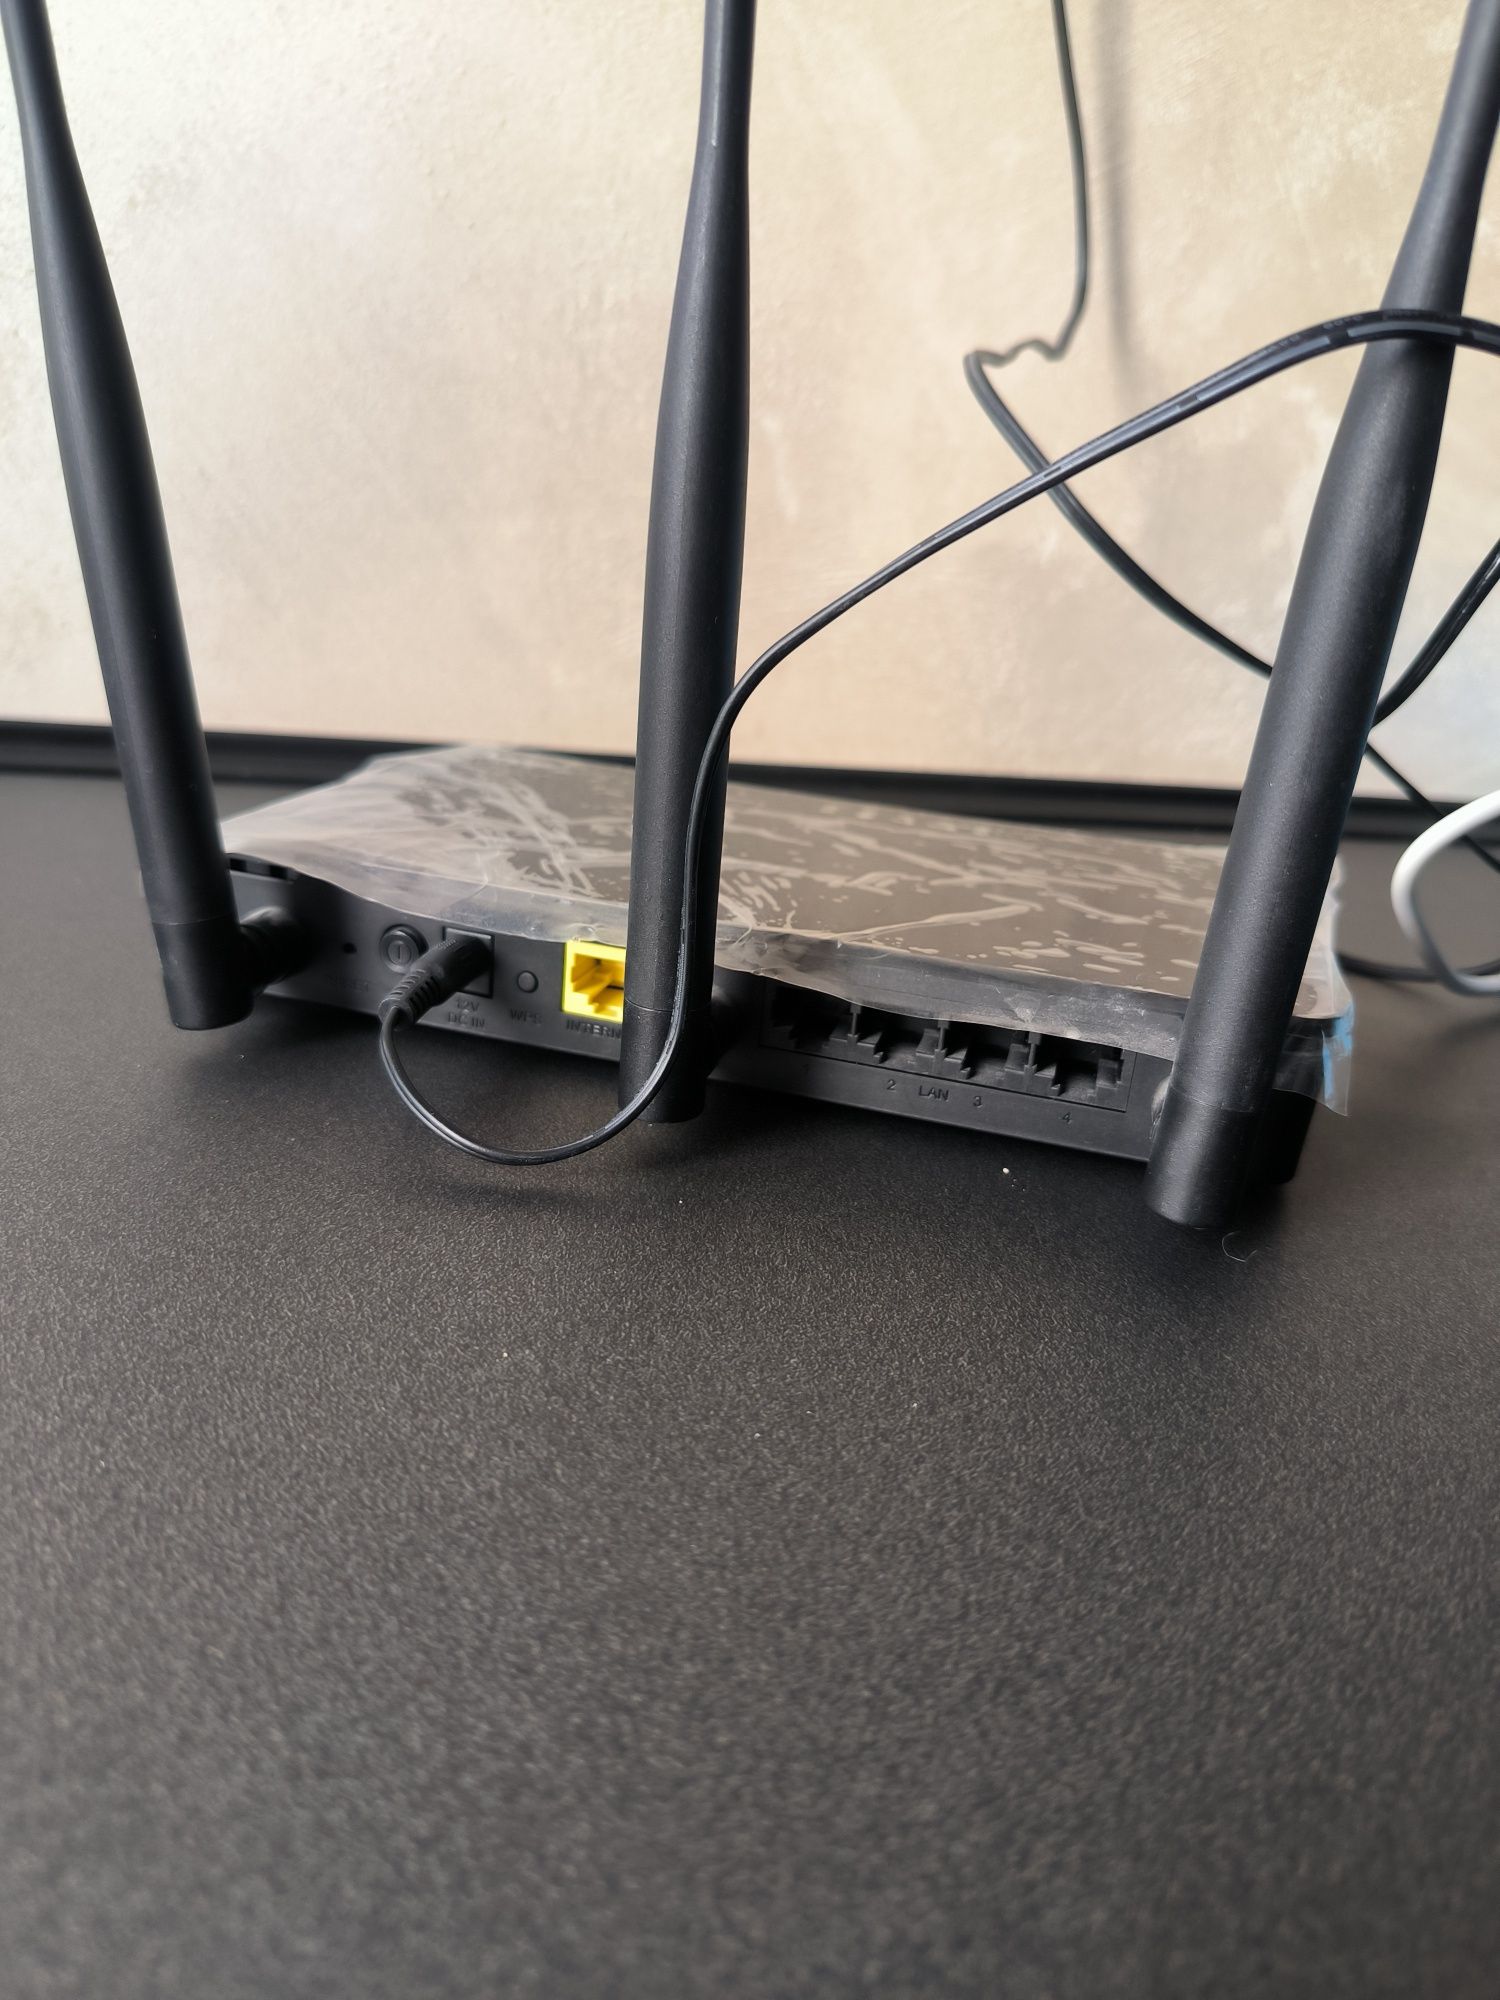 Router Wi-Fi D-Link DIR-809